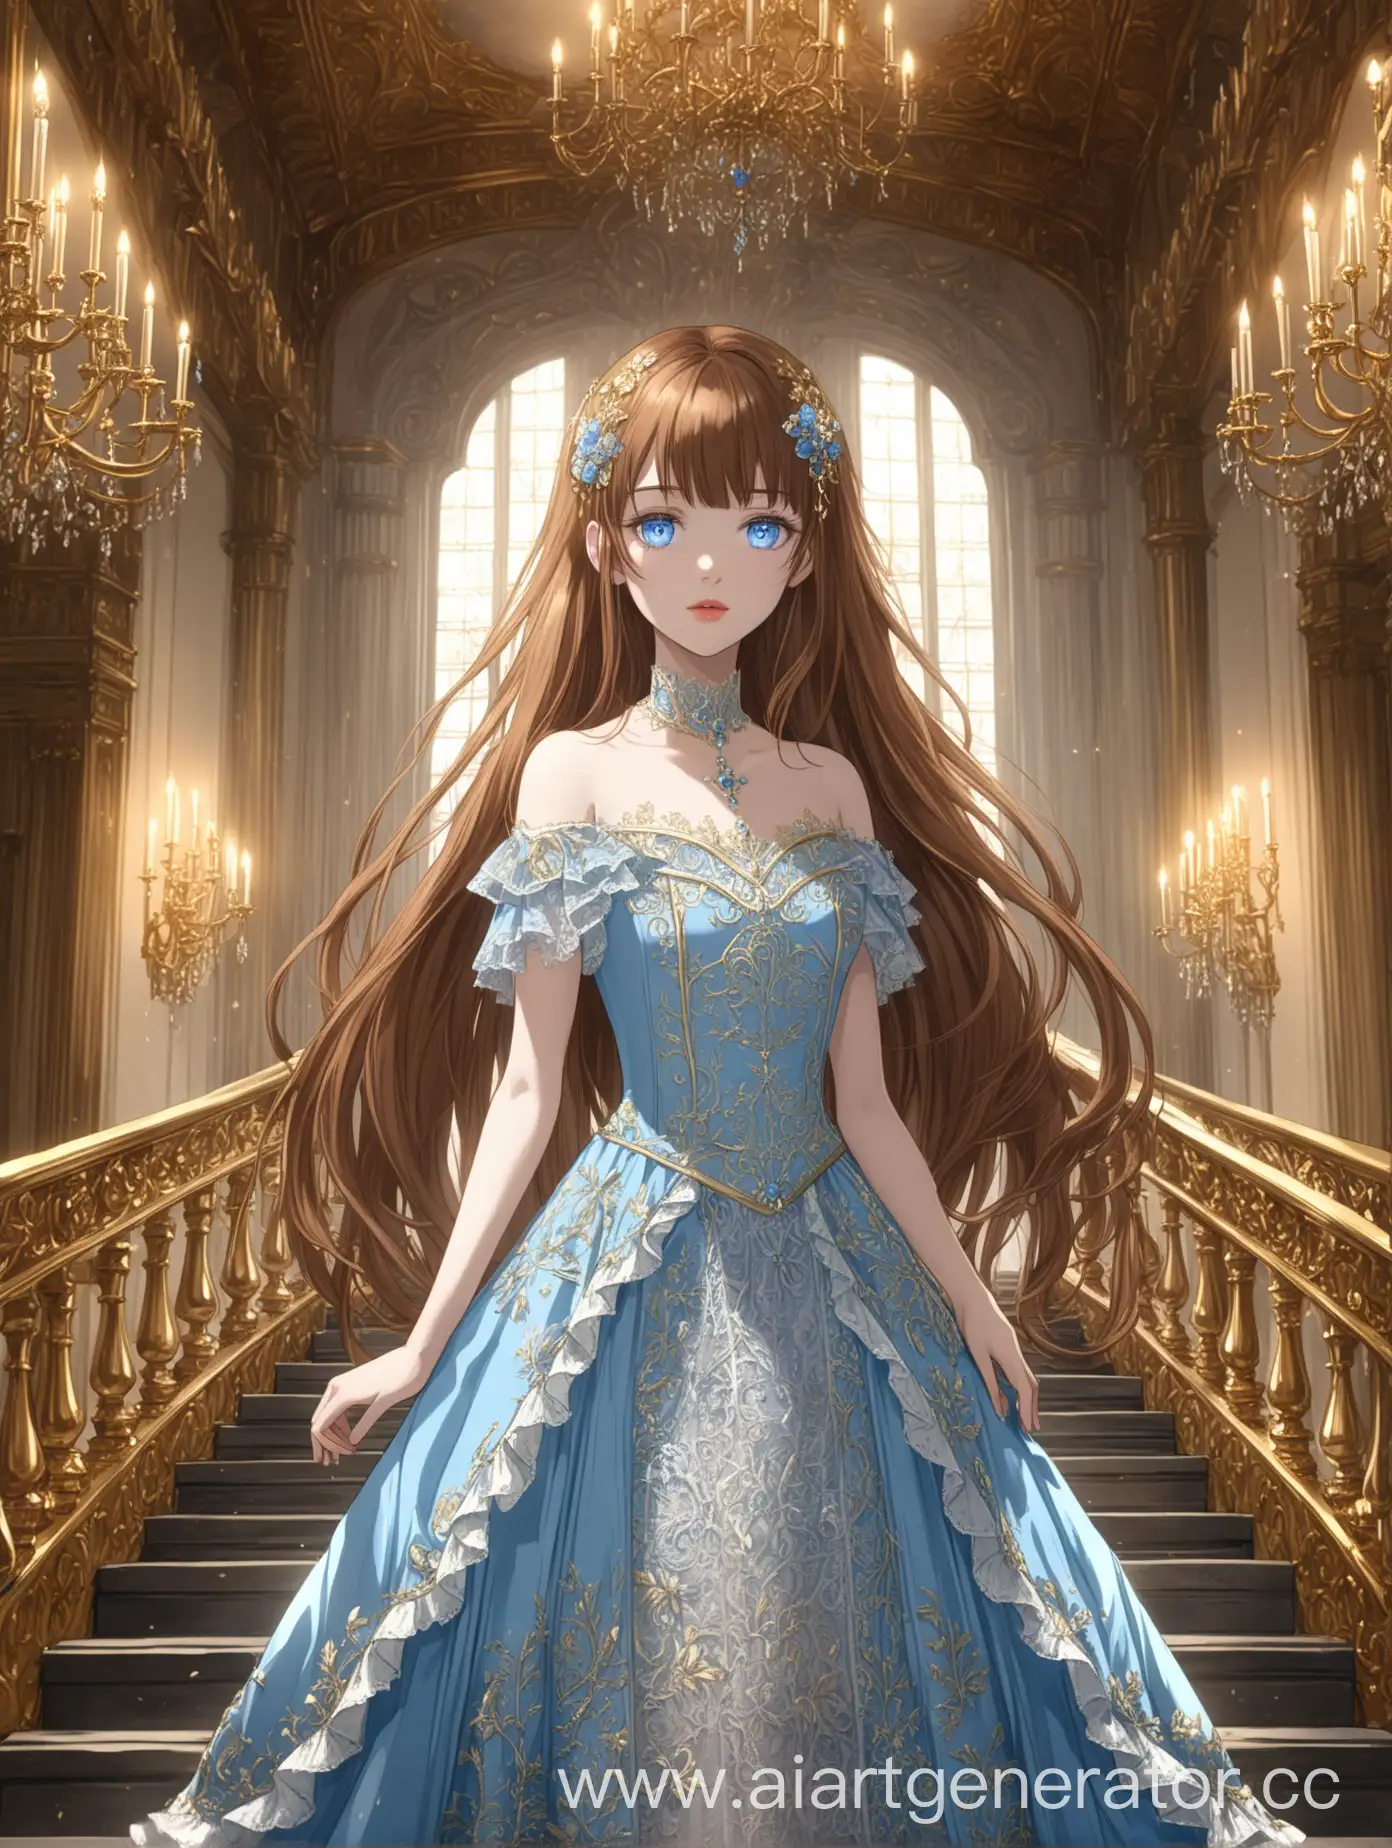 Elegant-Anime-Girl-with-Chestnut-Hair-in-Luxurious-Gilded-Hall